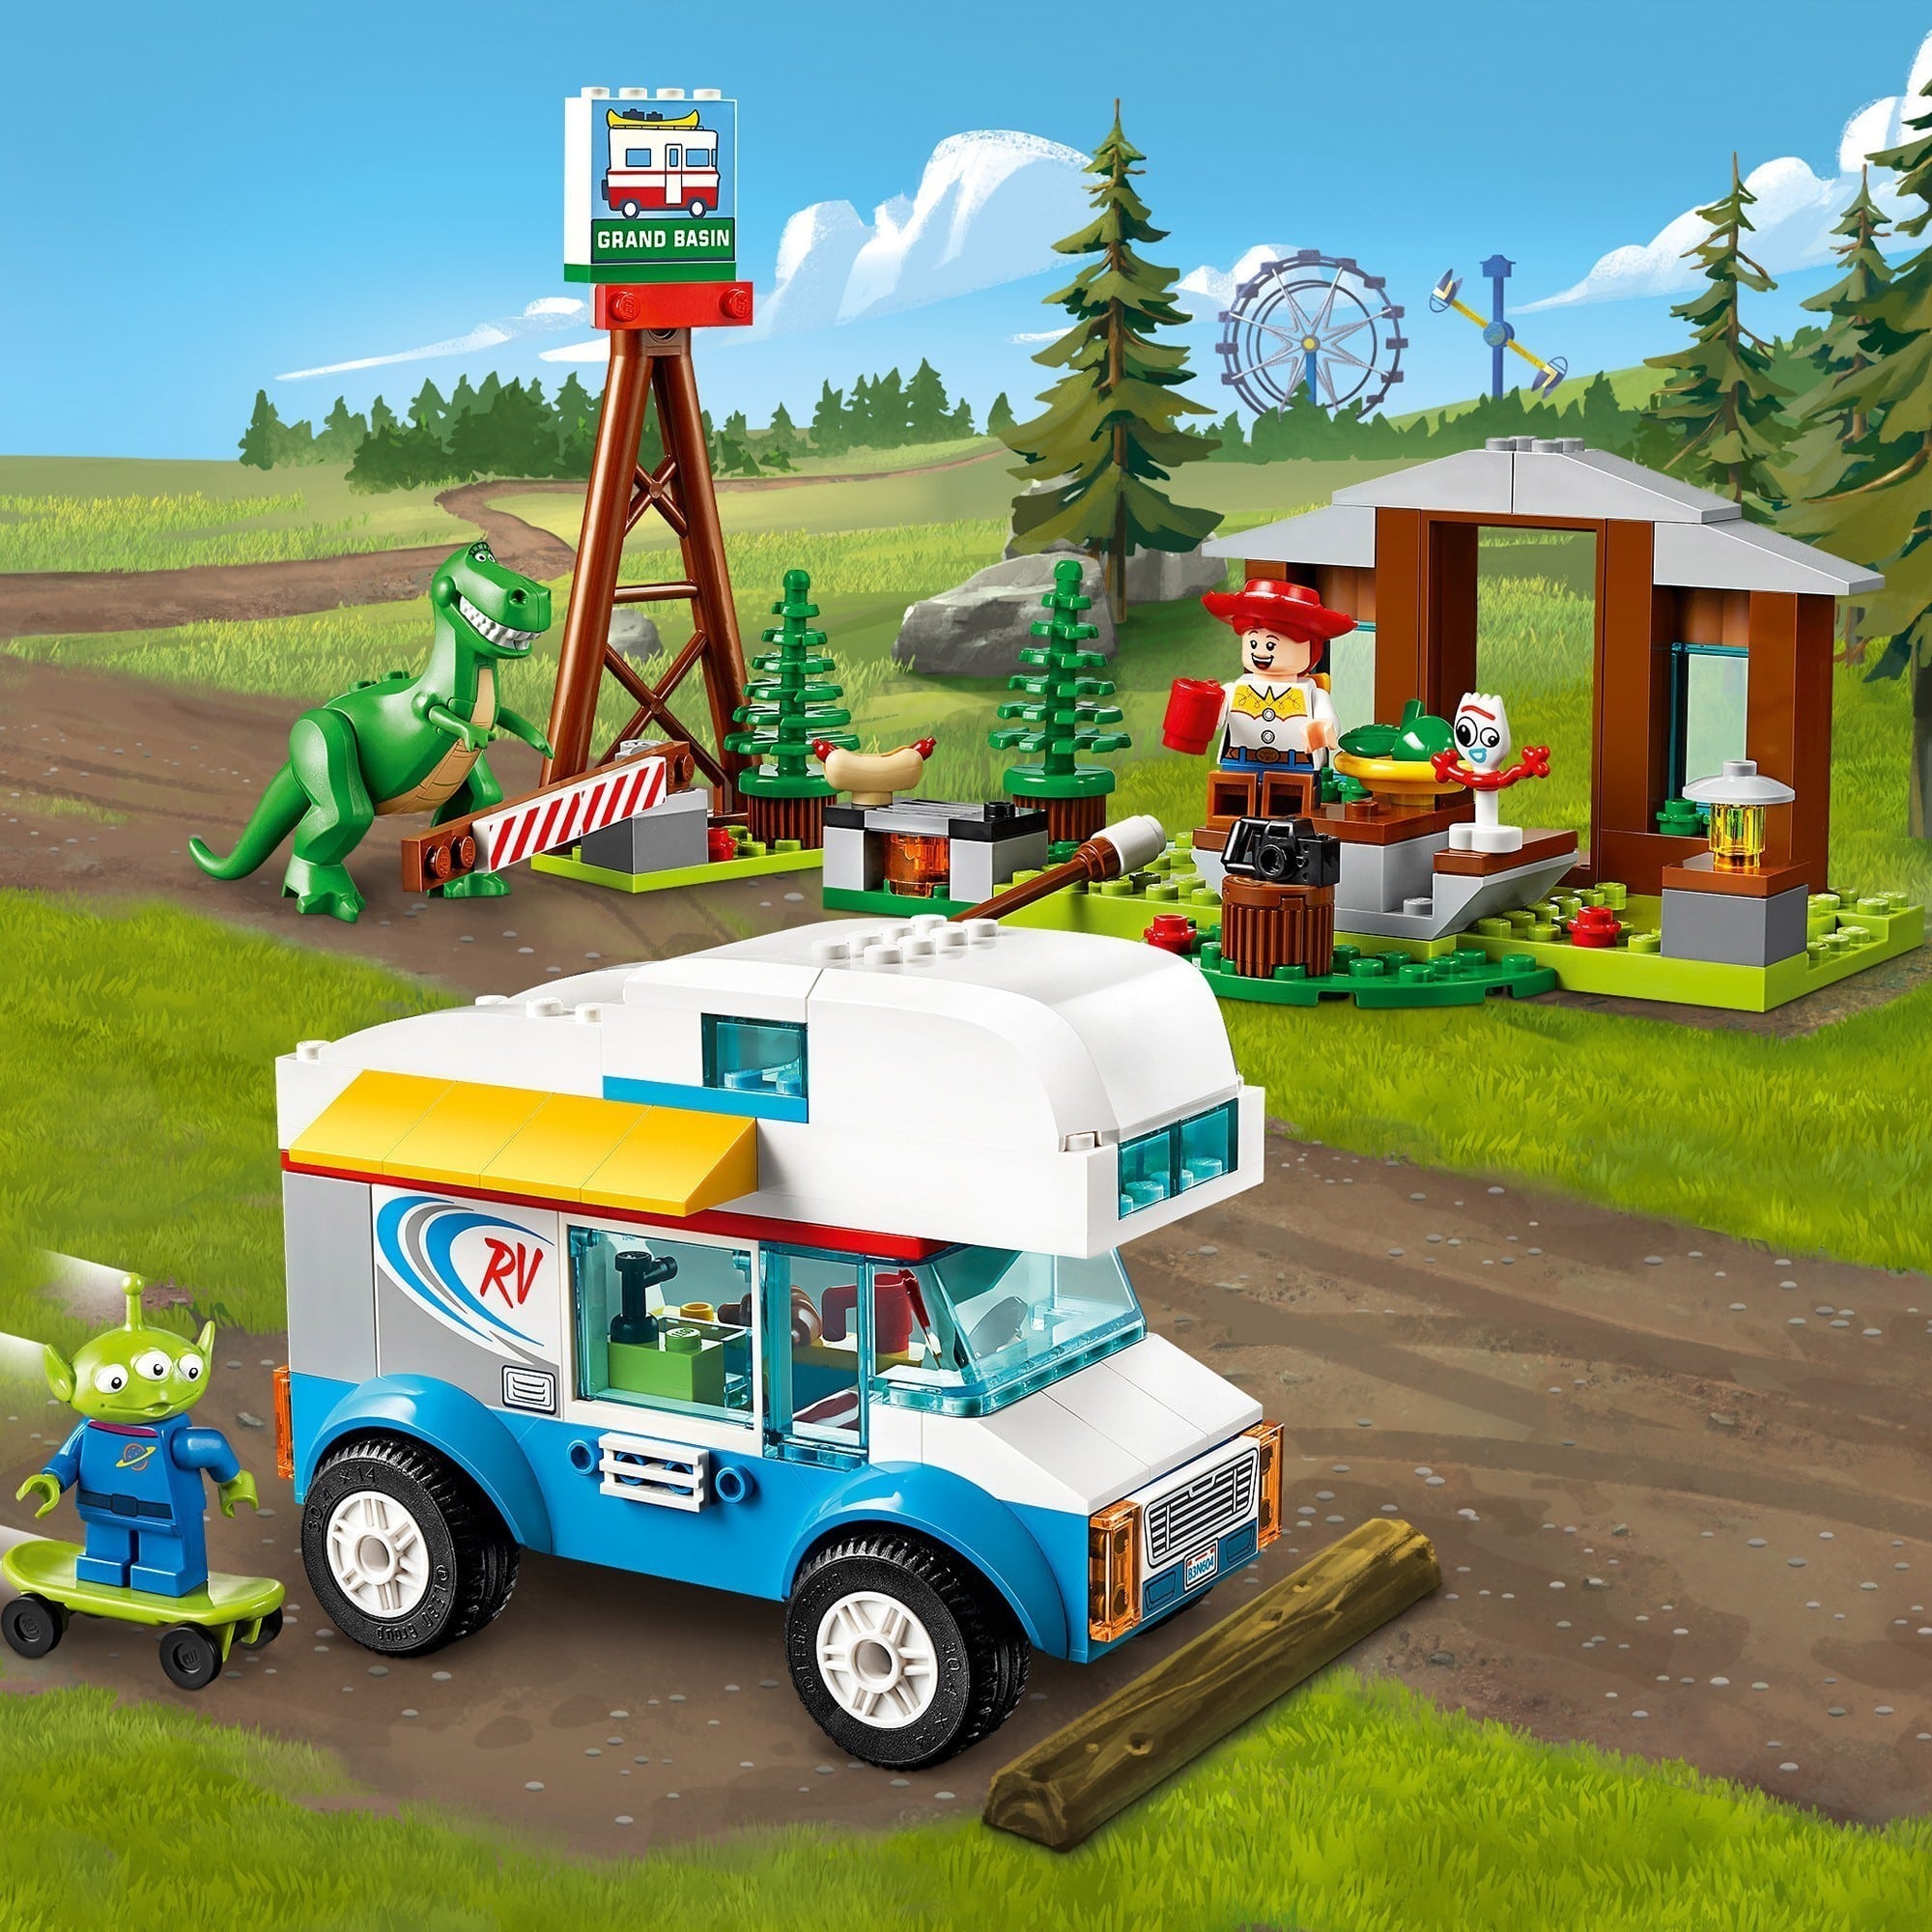 LEGO® - Toy Story 4 - 10769 Toy Story 4 RV Vacation